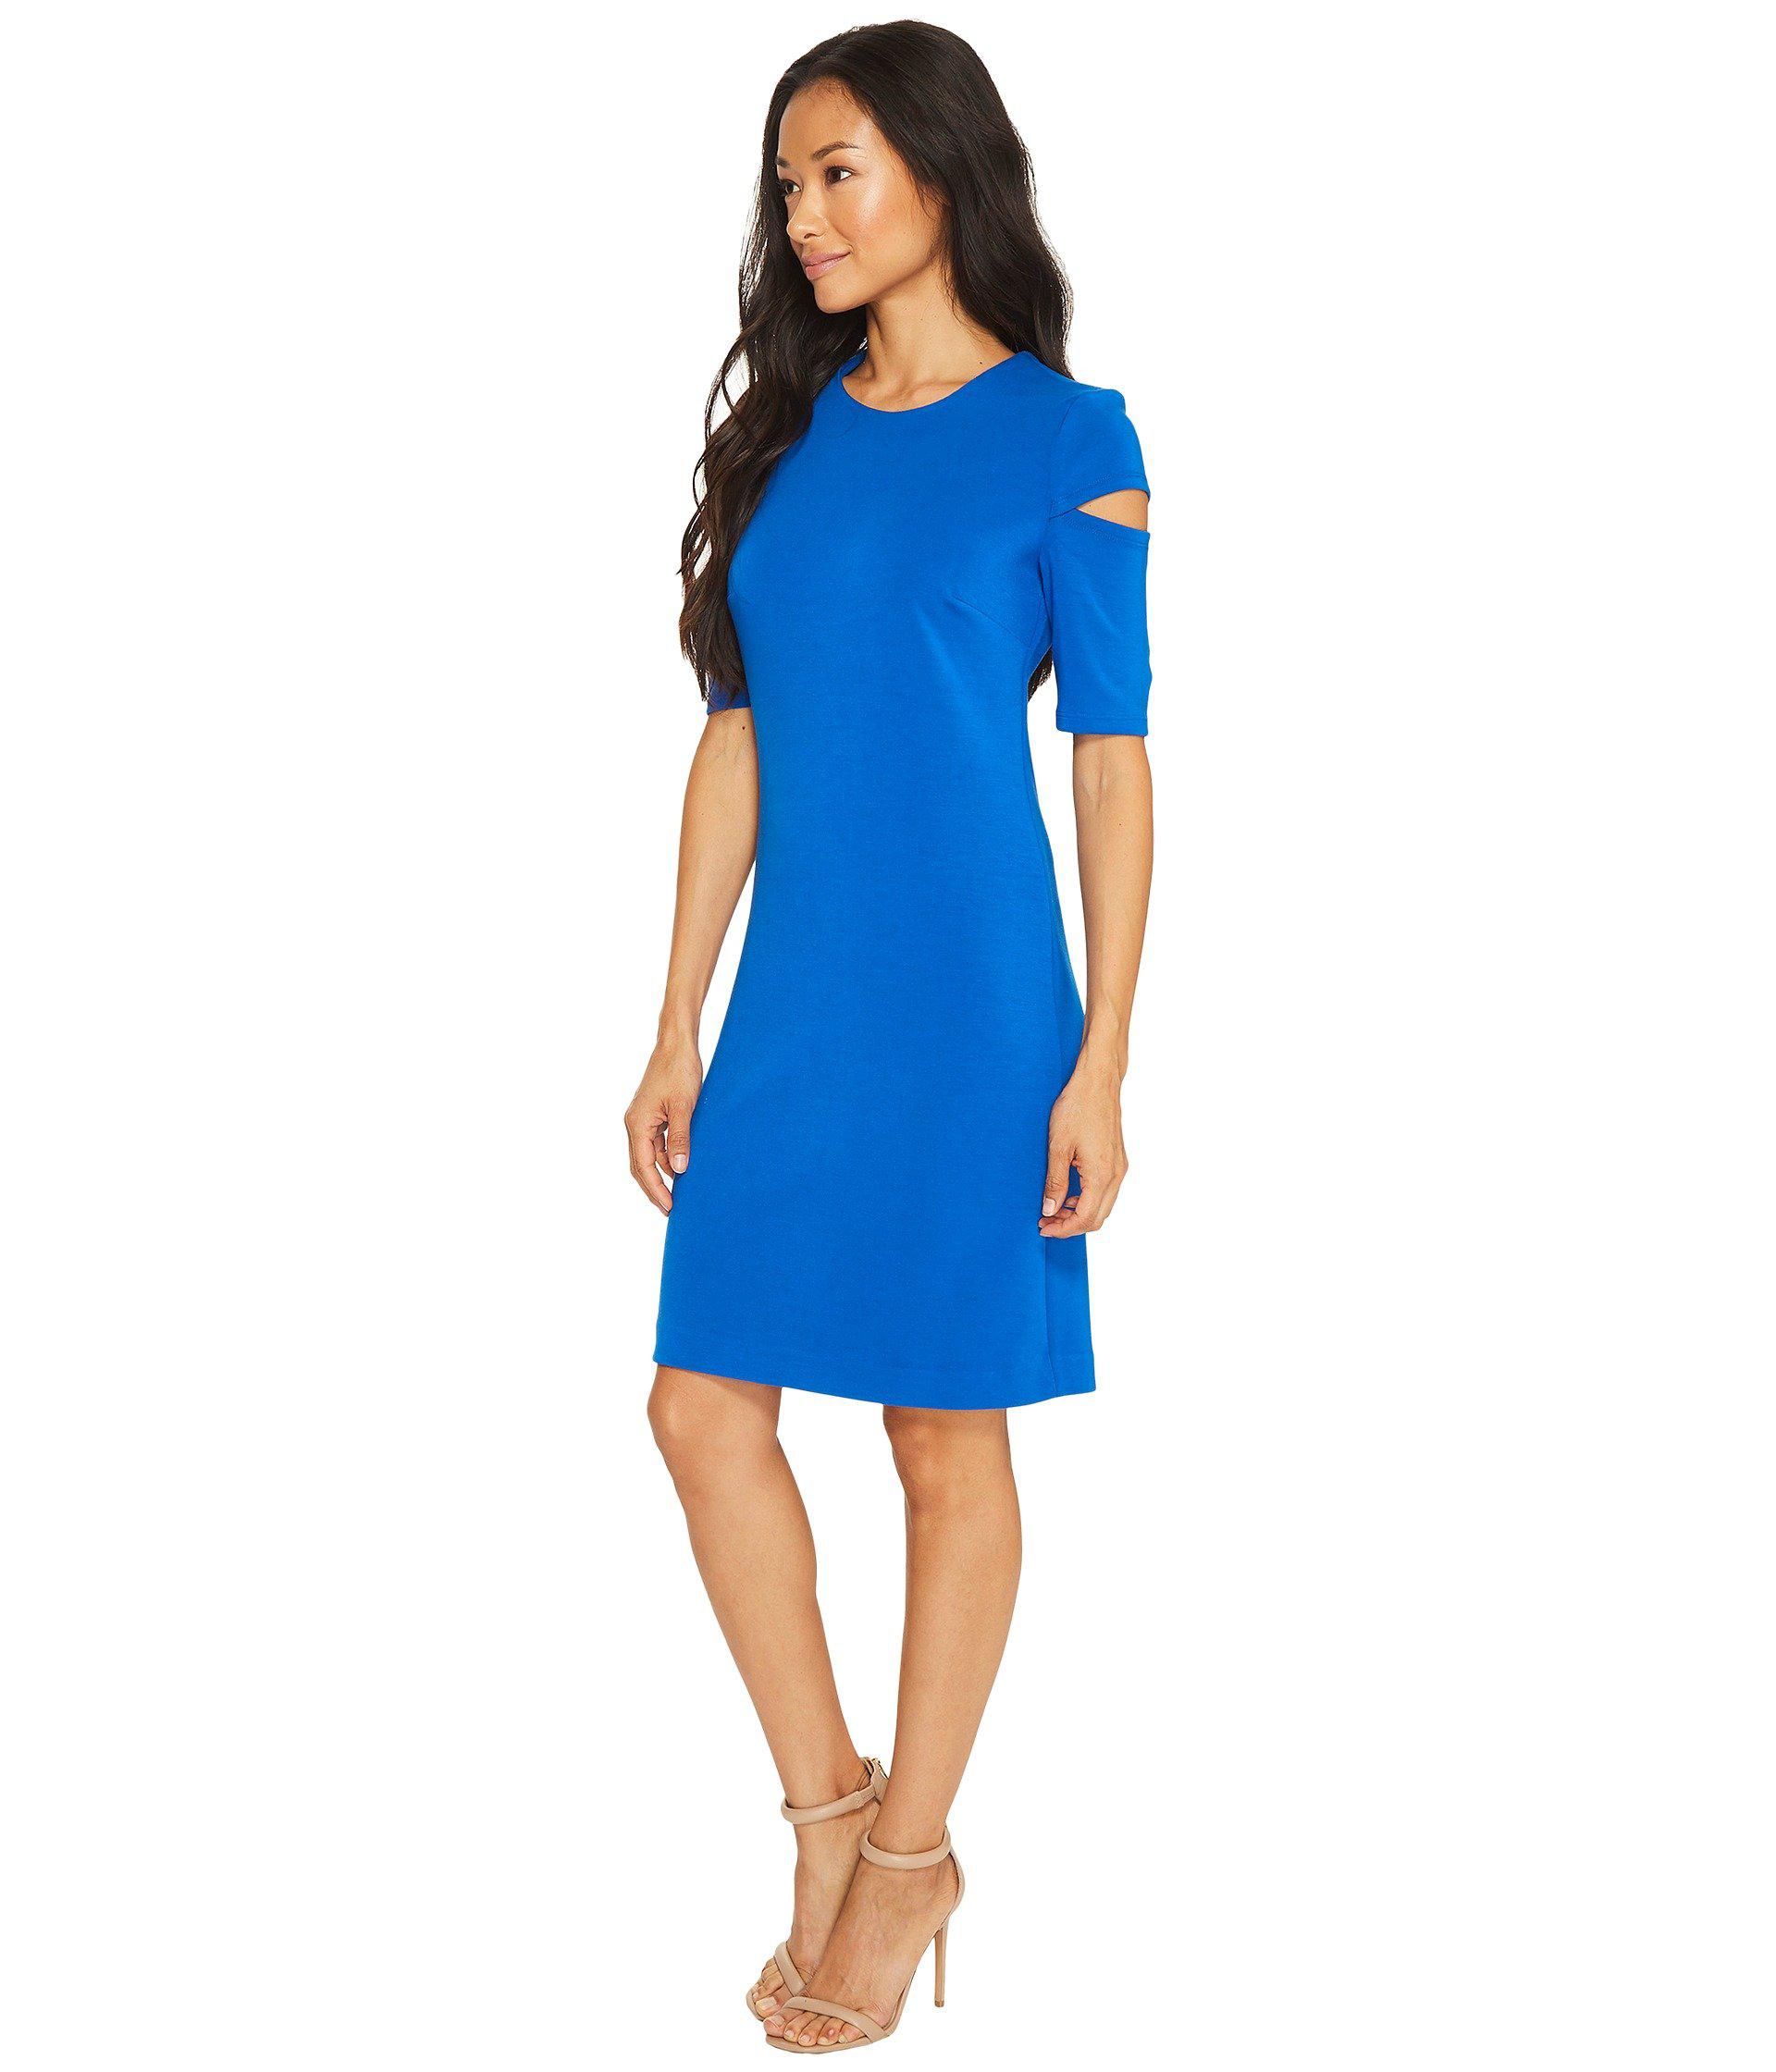 Calvin Klein Synthetic Arm Cut Out Short Sleeve Sheath Dress in Blue - Lyst